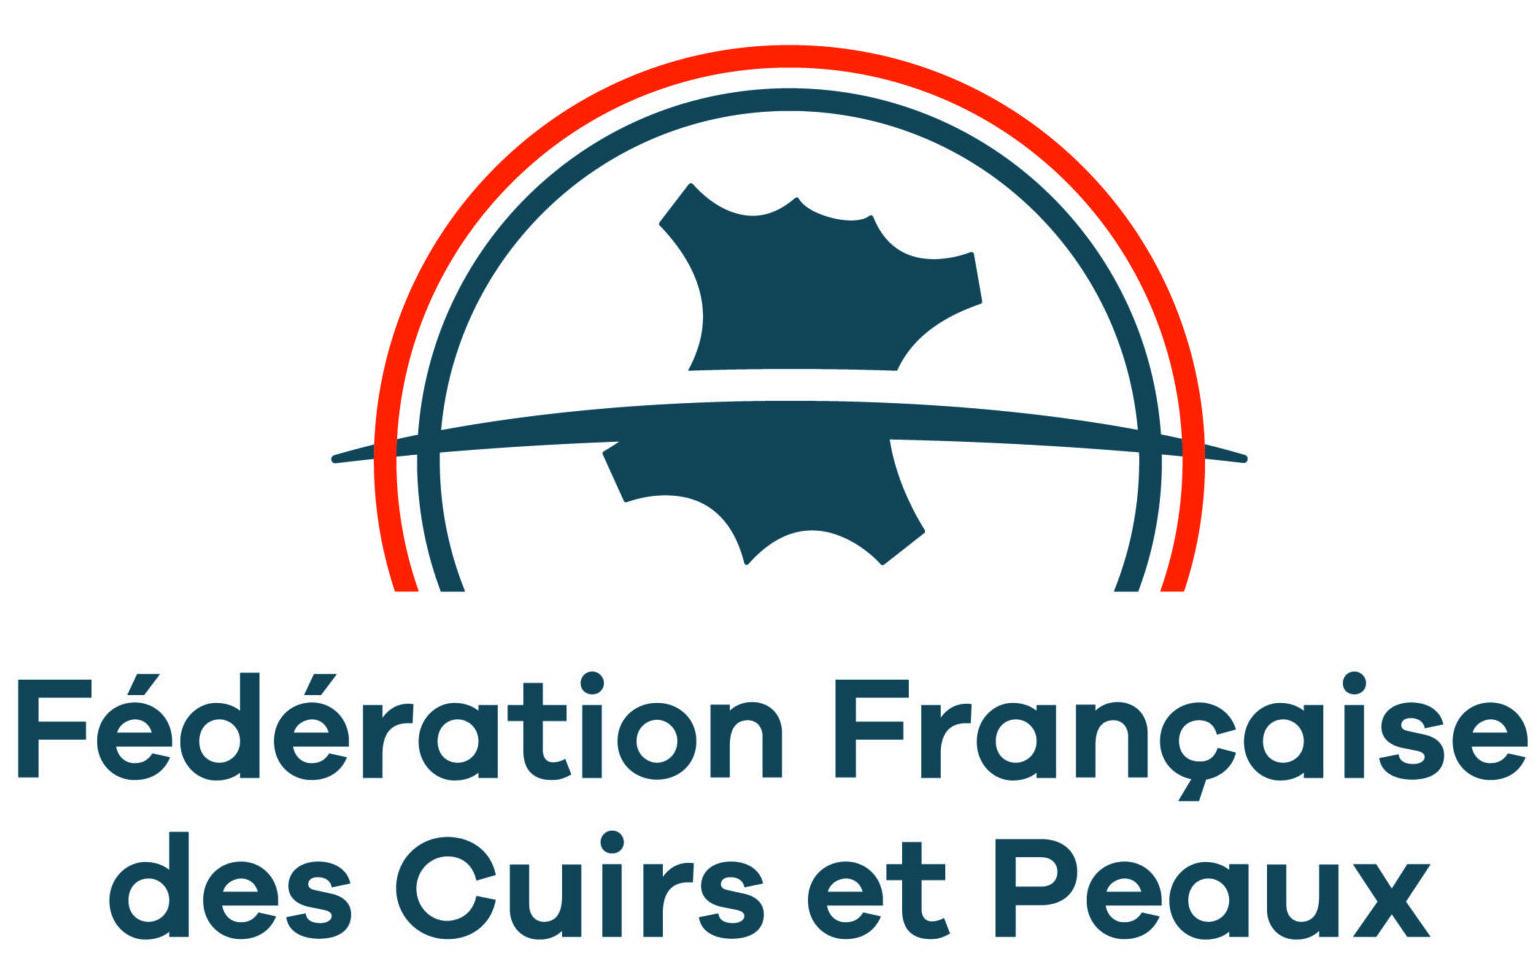 Logo FFCP